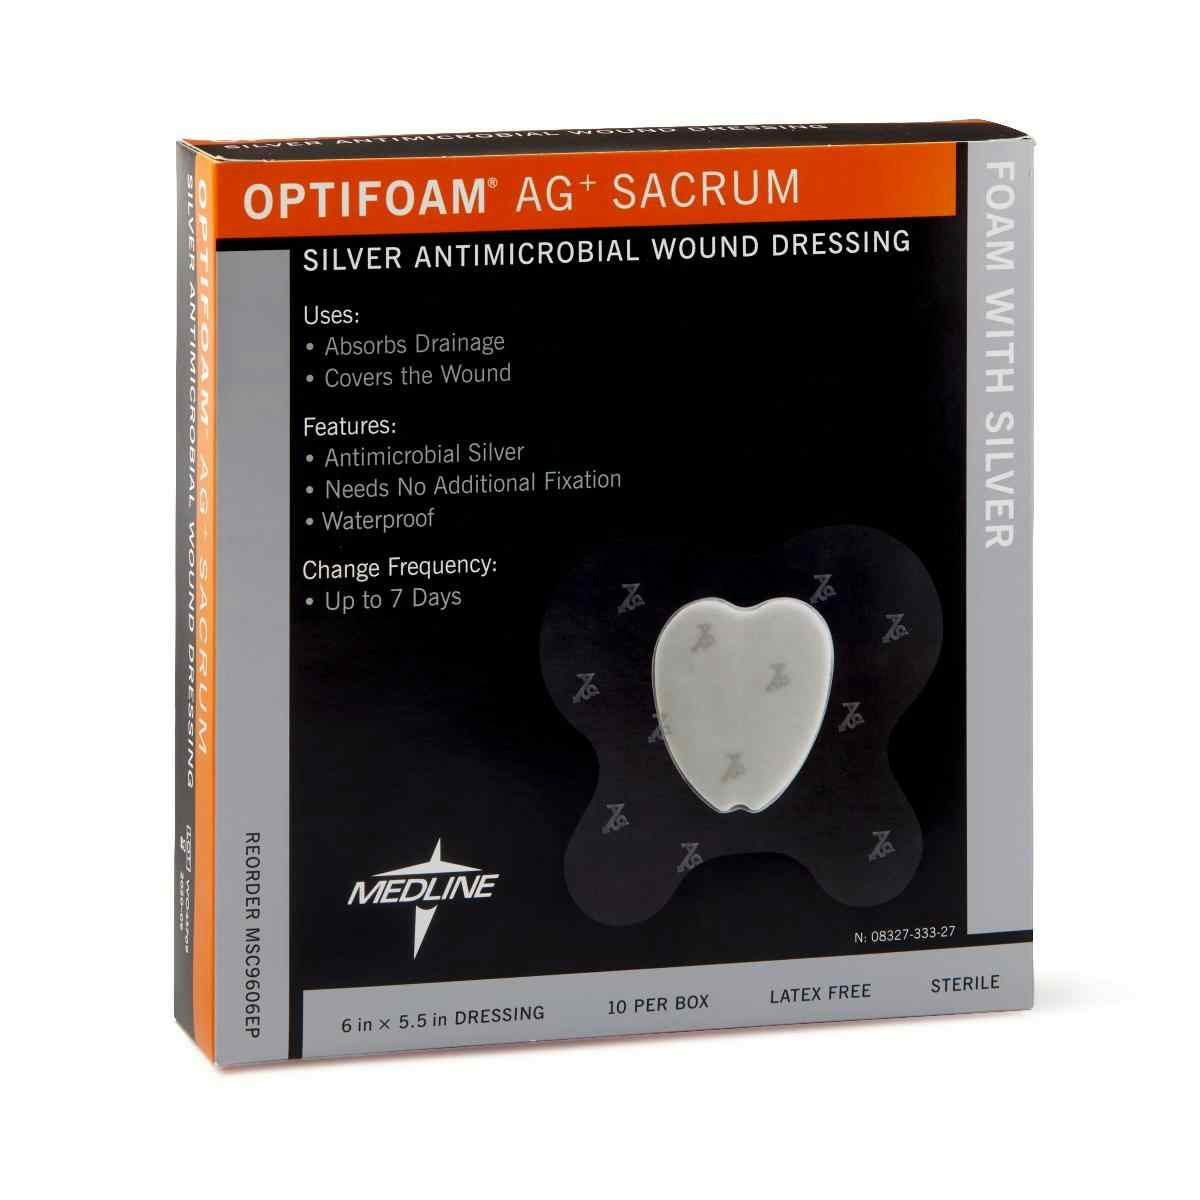 Optifoam AG+ Sacrum Silver Antimicrobial Wound Dressing, MSC9606EPZ, 6" x 5 1/2" - Sacrum - Box of 10